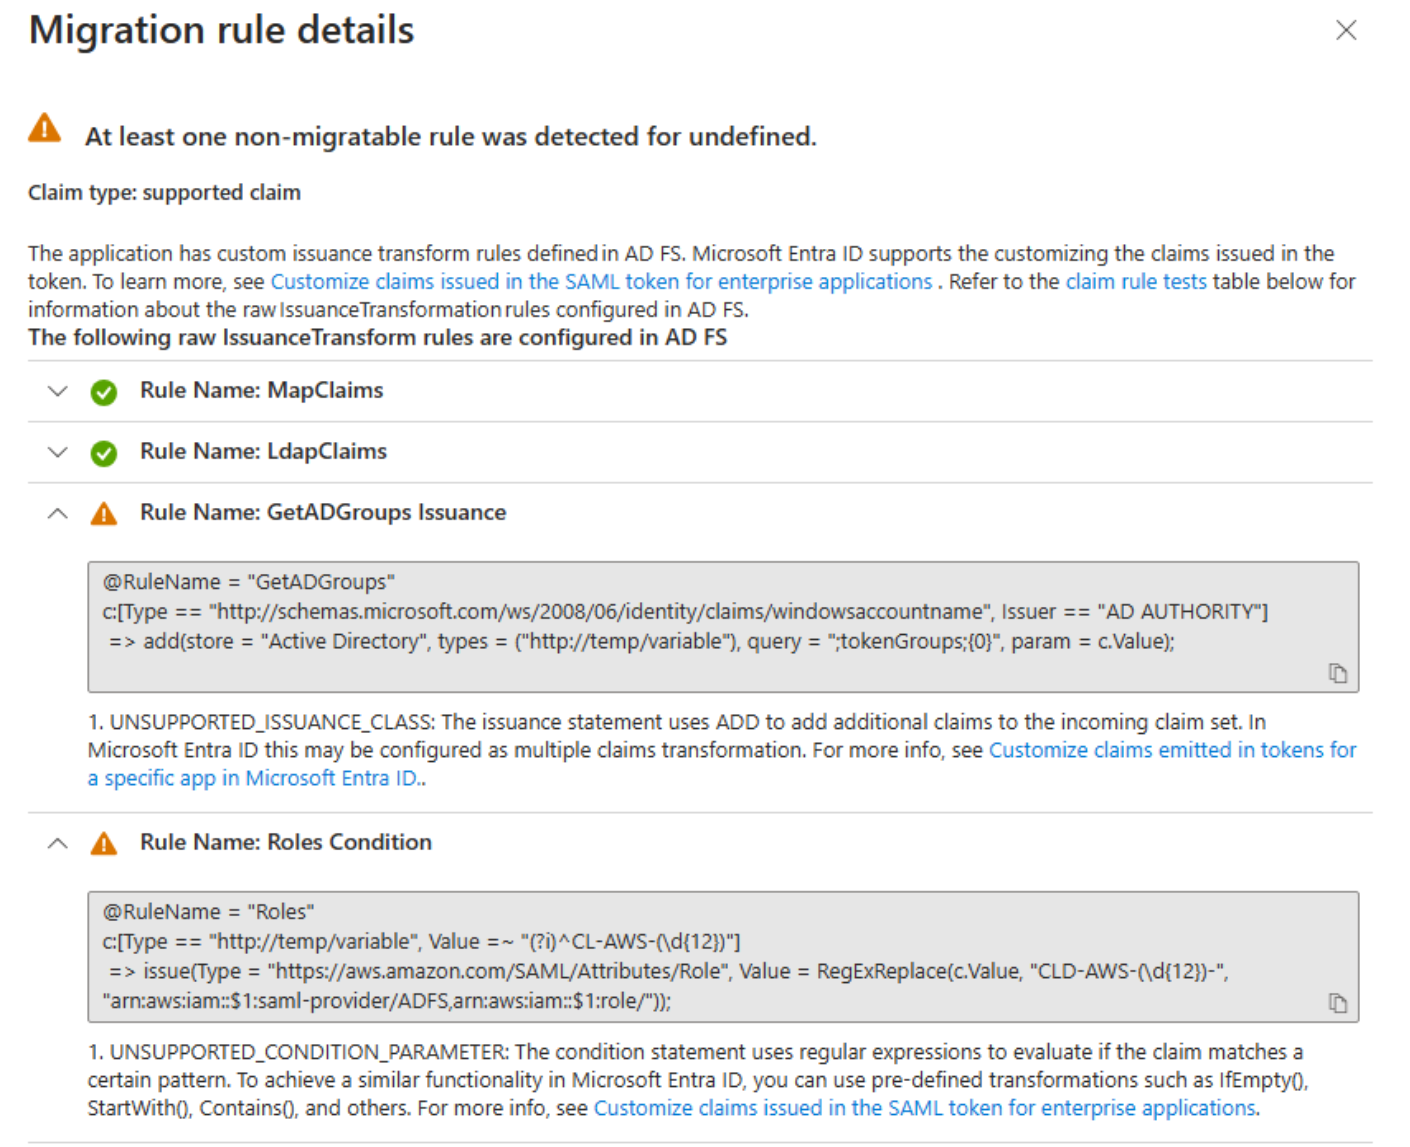 Снимок экрана: область сведений о правилах миграции приложений AD FS.